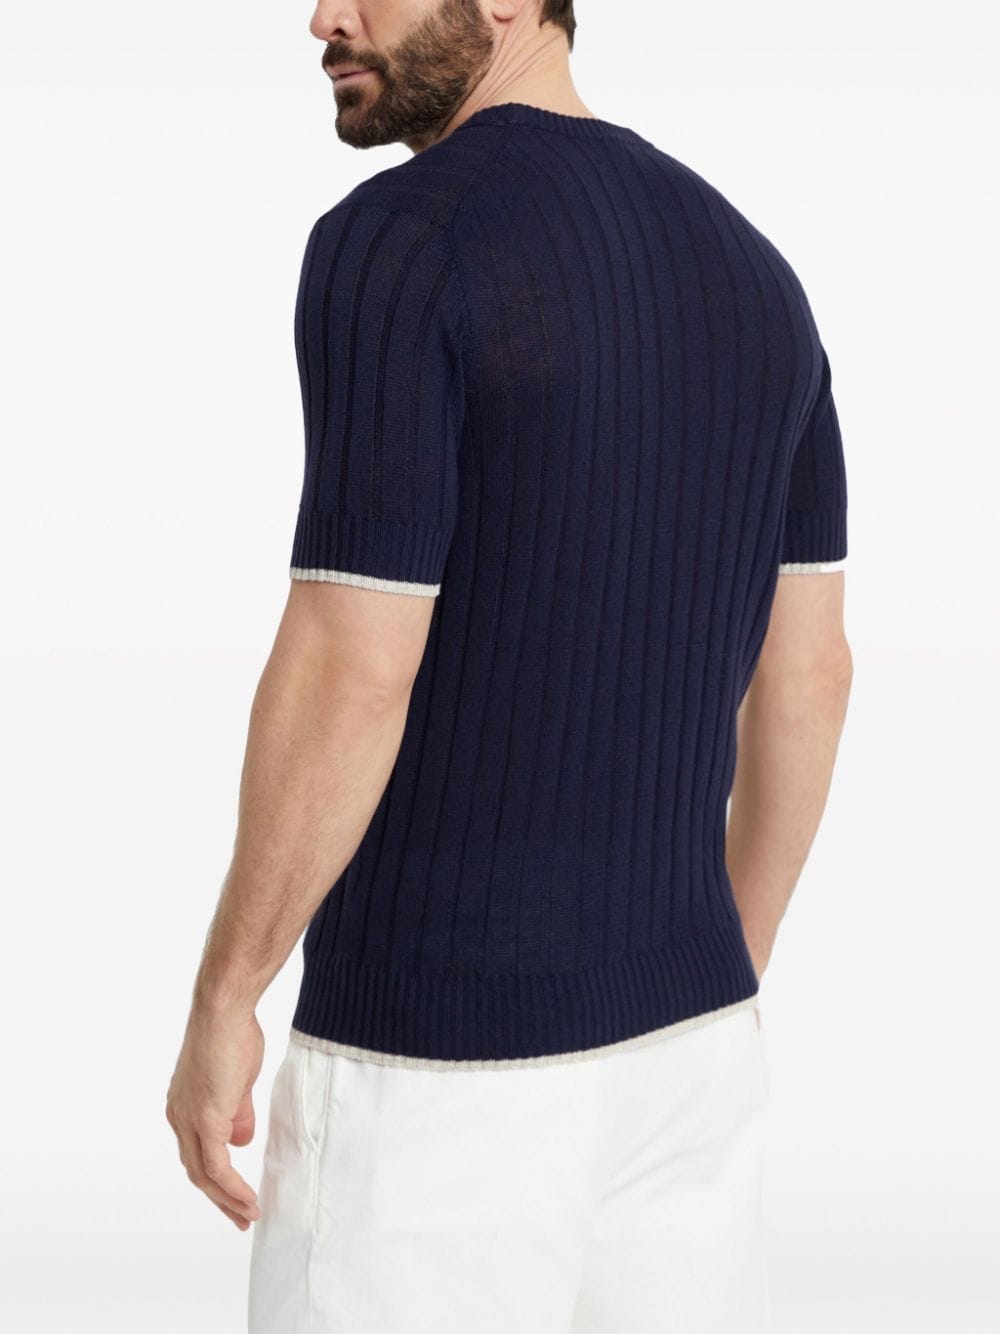 BRUNELLO CUCINELLI Men's Navy Blue Linen-Cotton Blend Ribbed Knit Short Sleeves Sweater